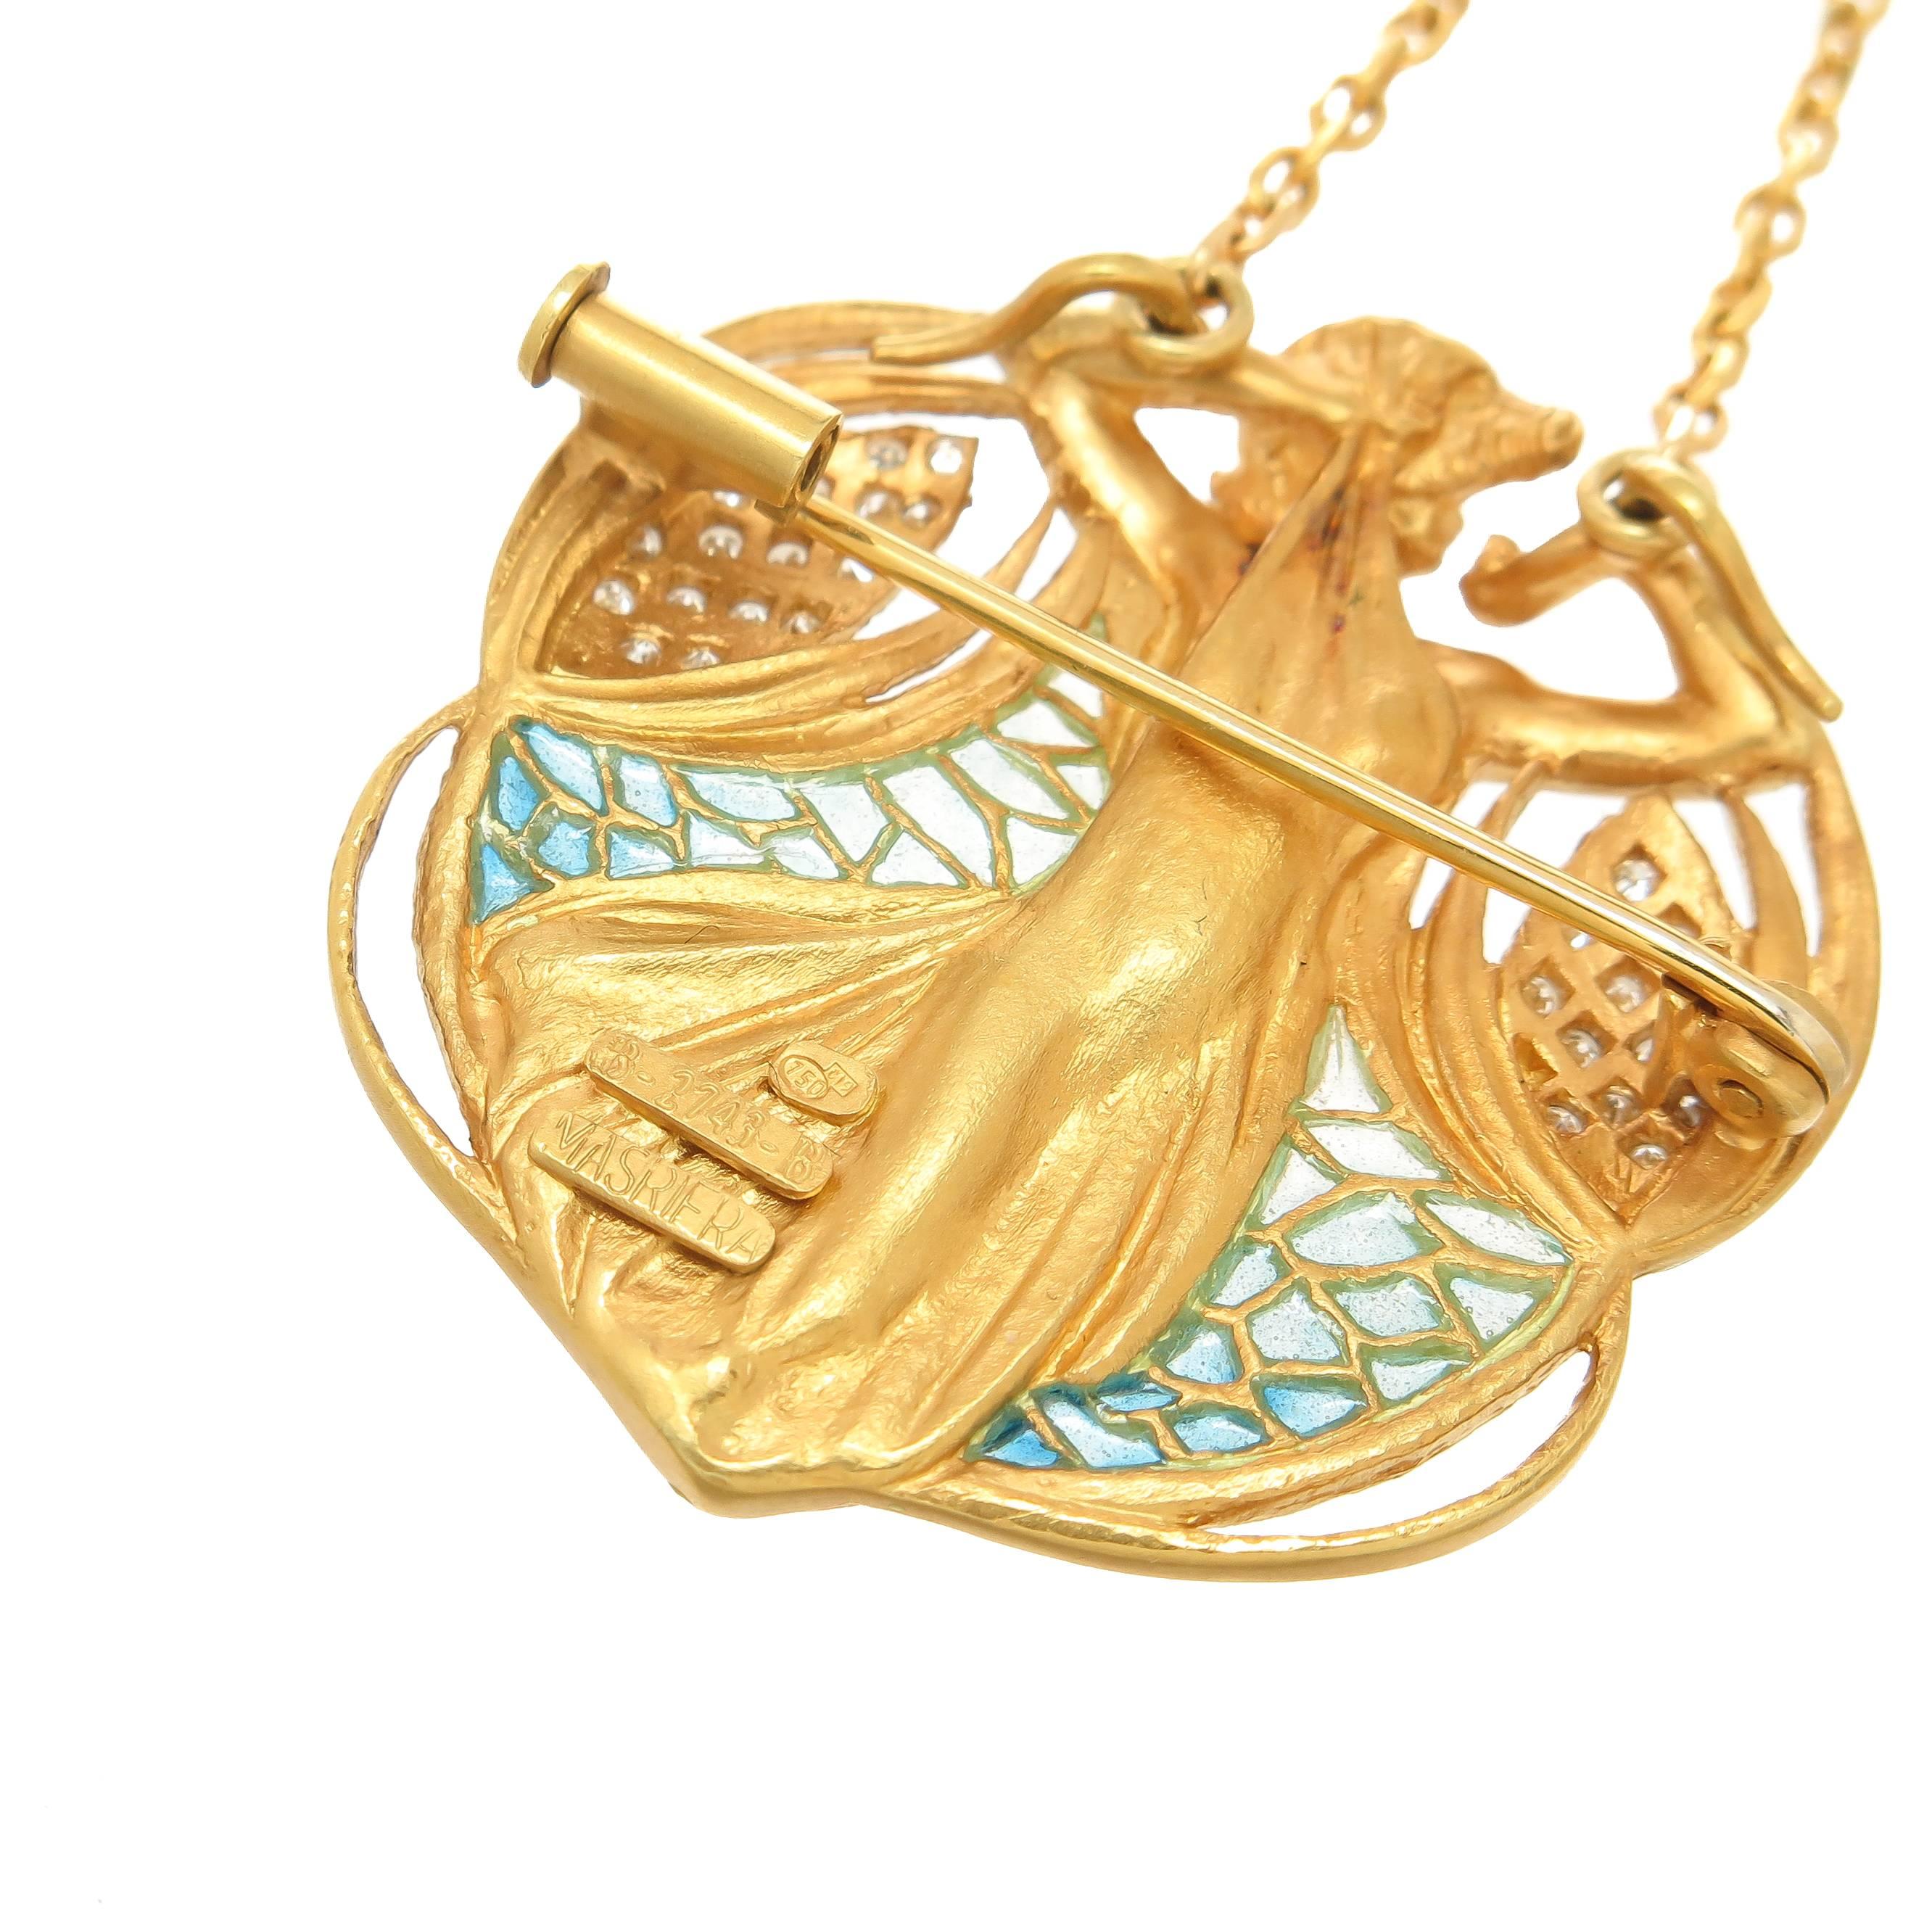 Women's Masriera Plique-a-Jour Enamel Diamond Gold Pendant Brooch